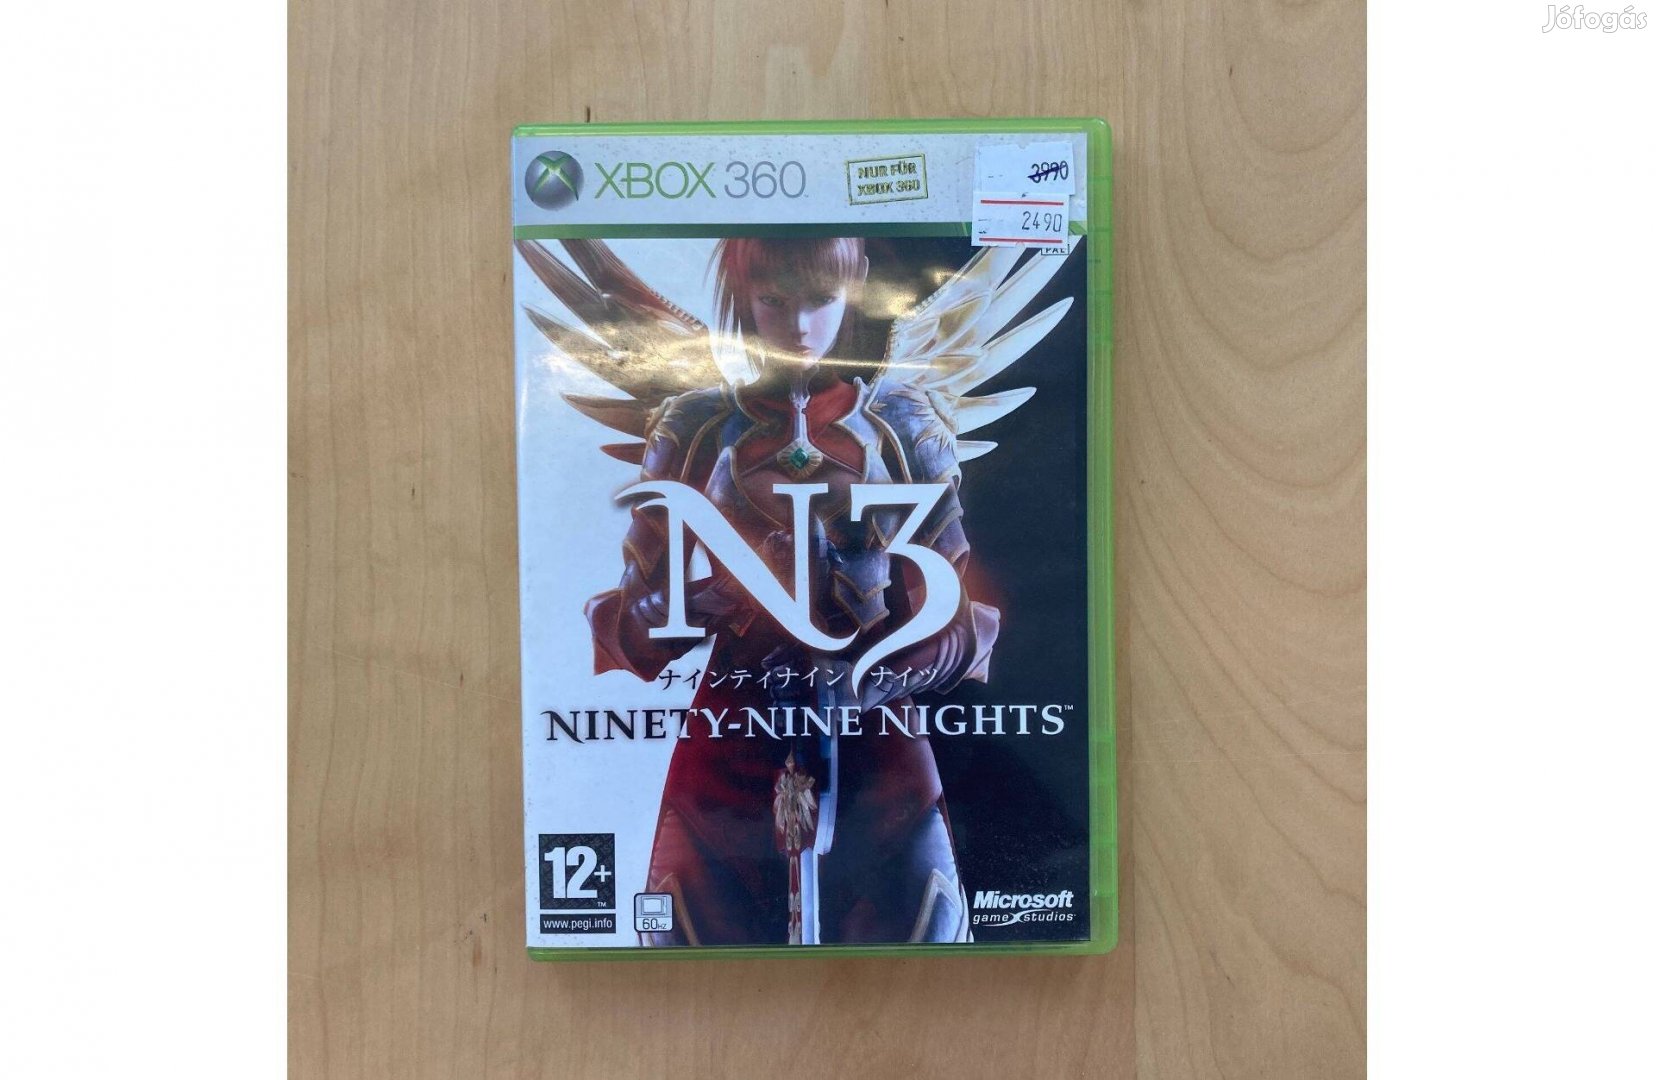 Xbox 360 N3 Ninety-Nine Nights